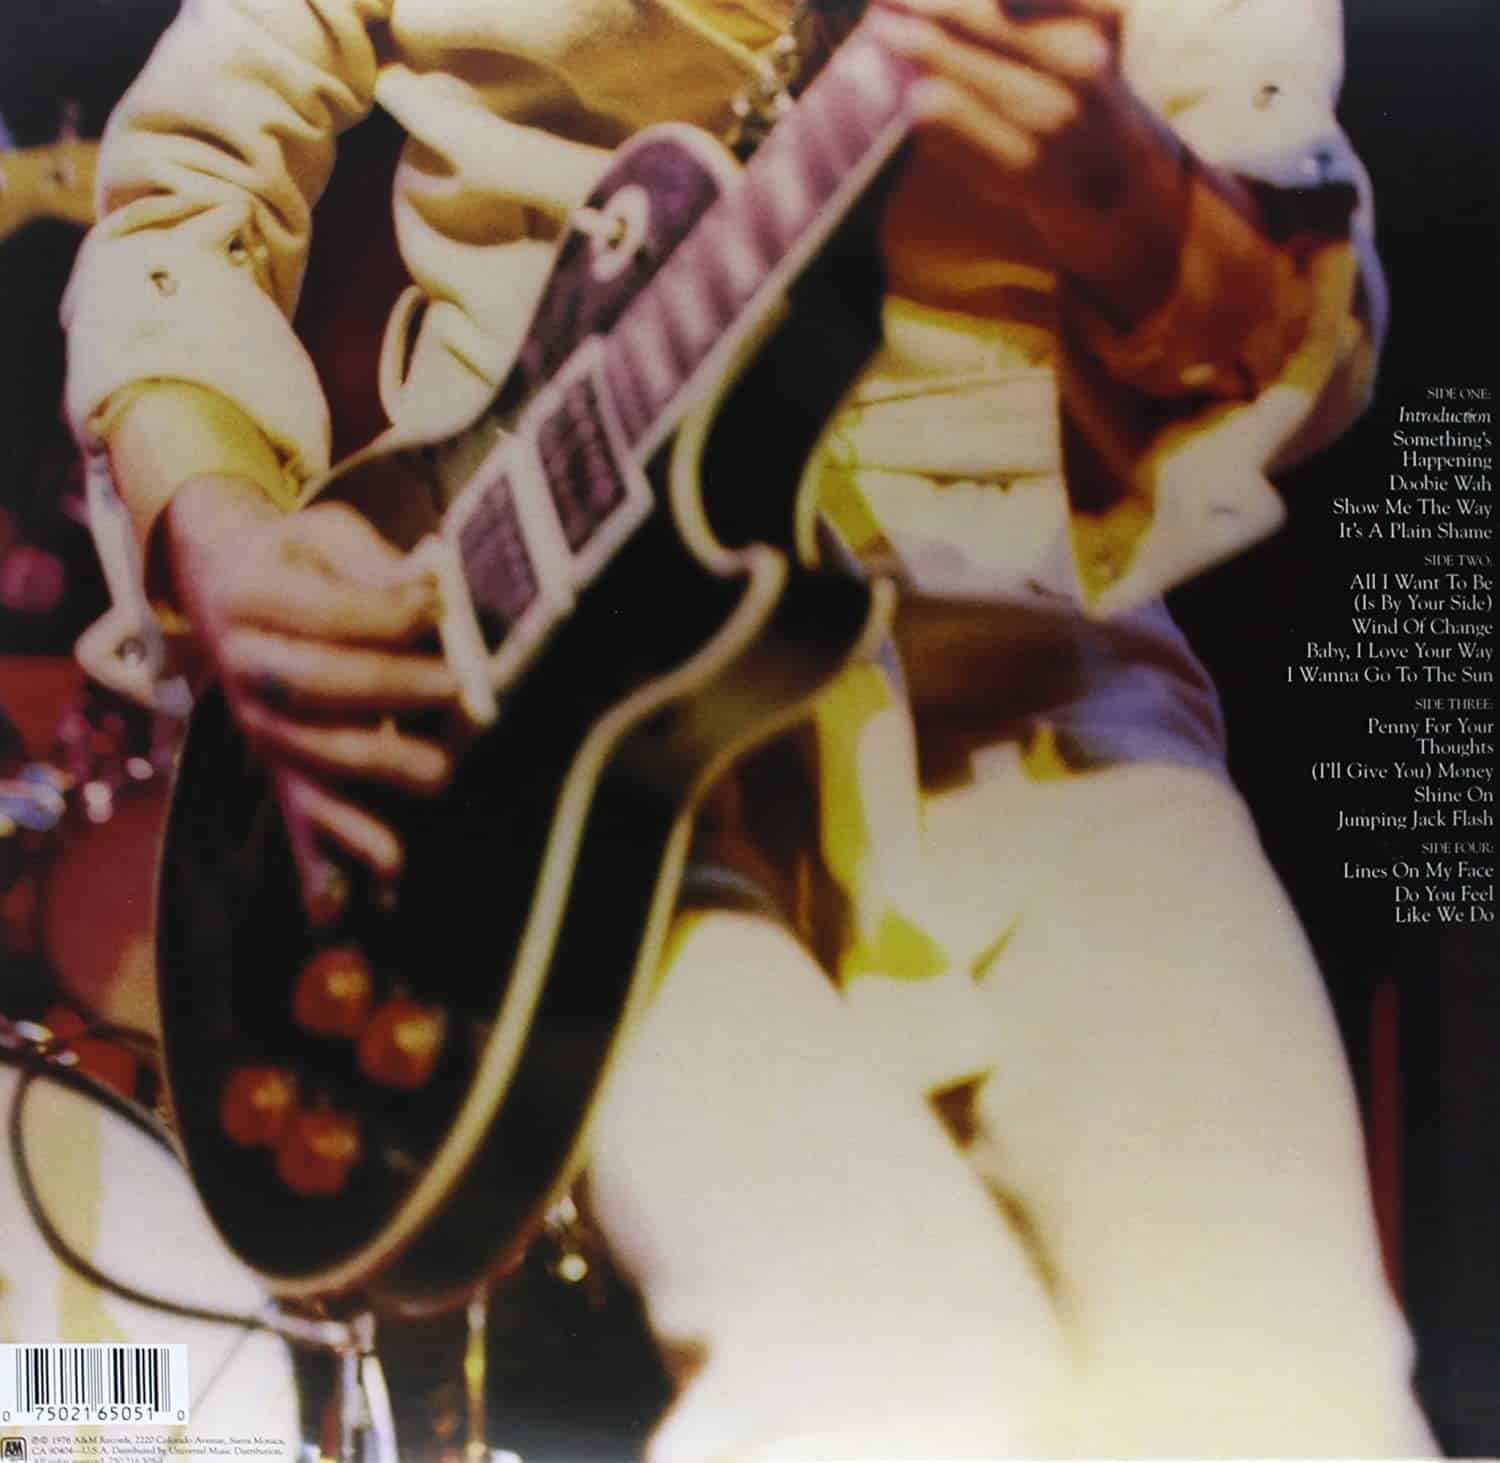 Peter-Frampton-Frampton-Comes-Alive-vinyl-record-album-back